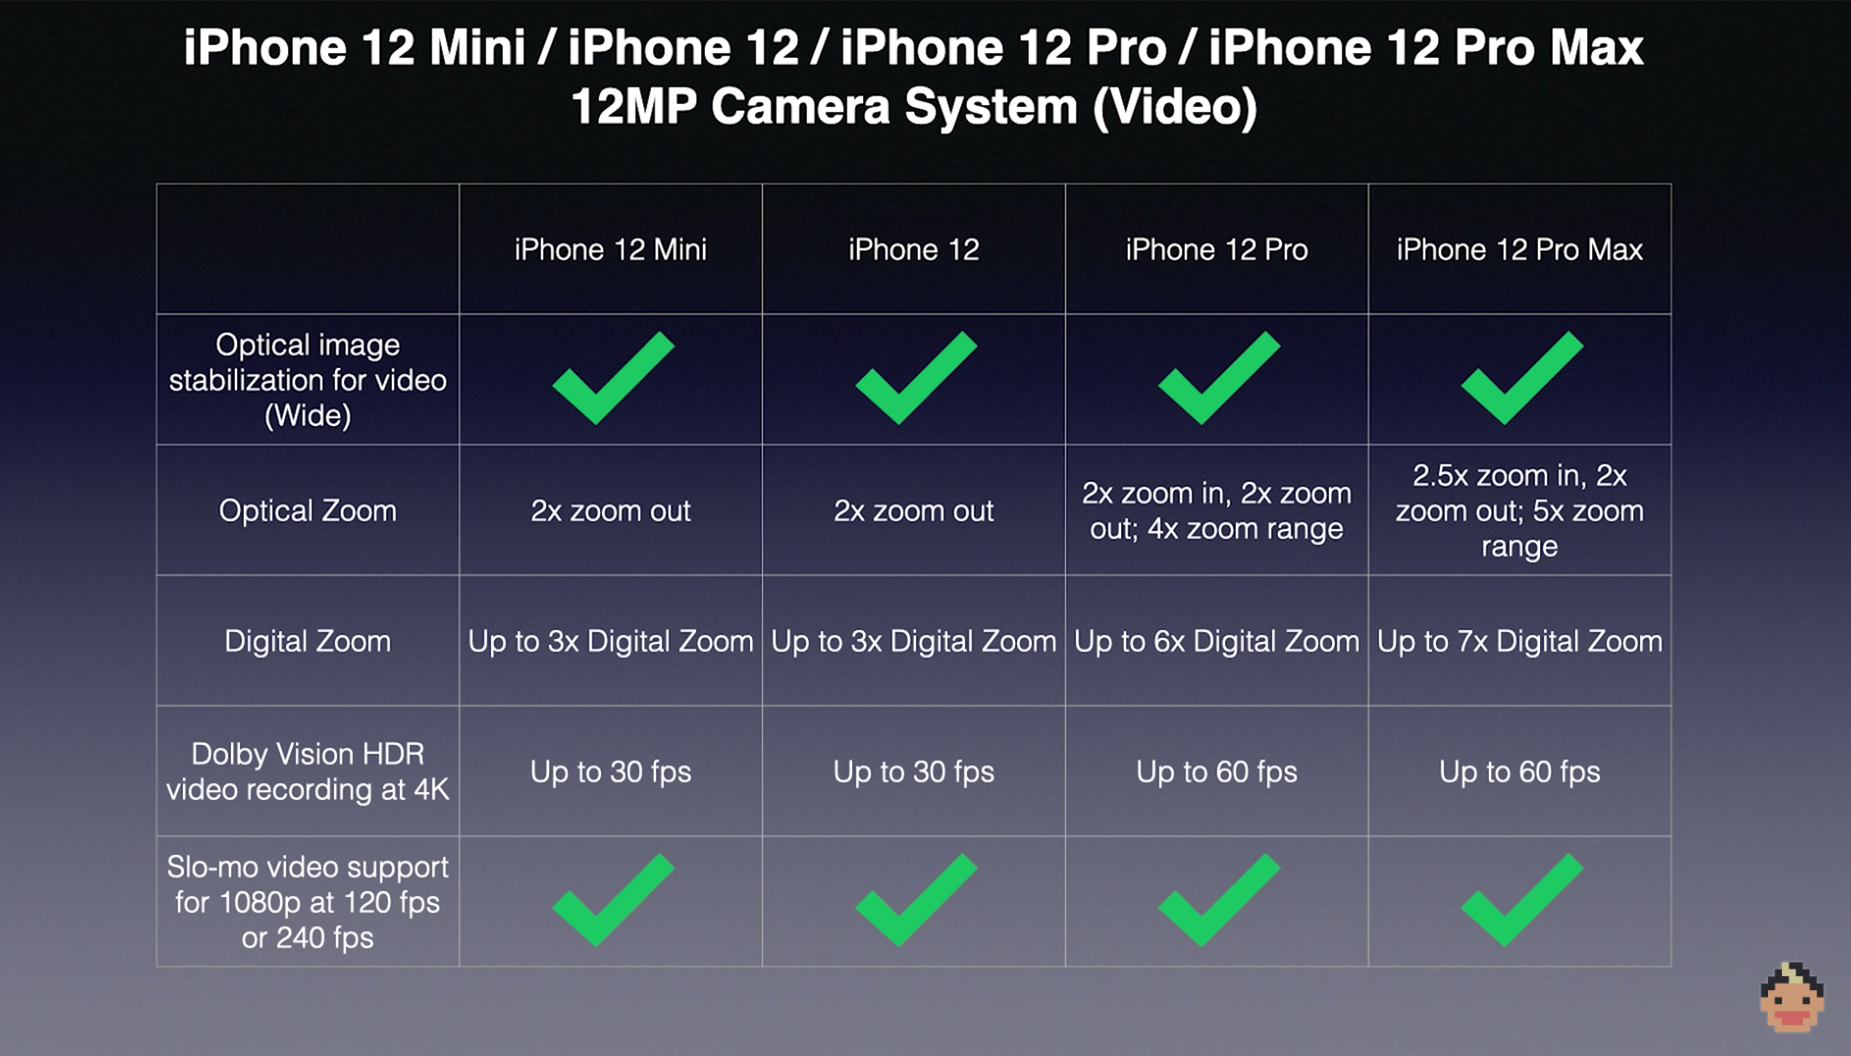 Phone 12 Mini / iPhone 12 / iPhone 12 Pro / iPhone 12 Pro Max 12MP Camera System (Video) comparison table